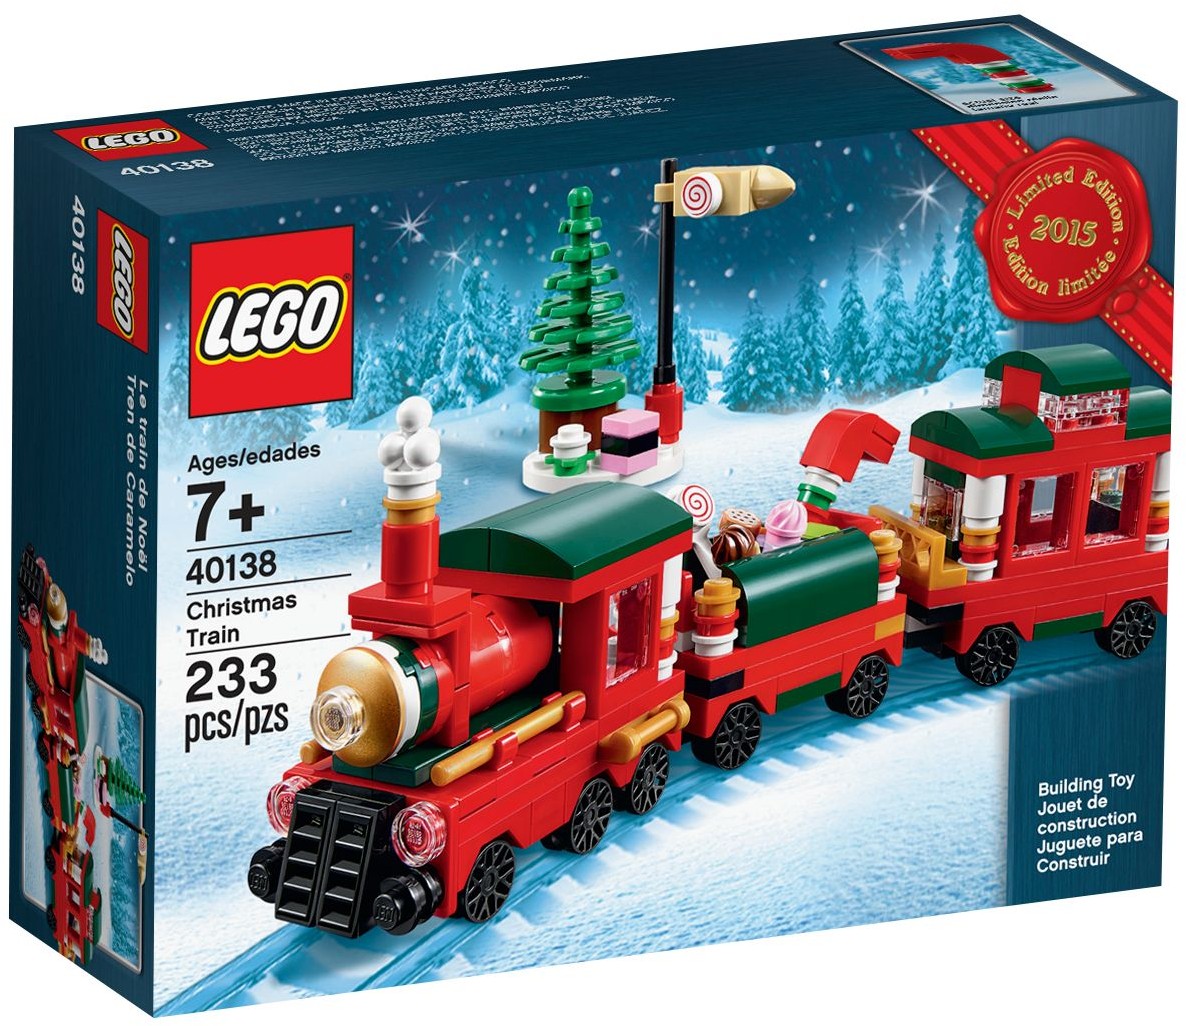 Free Christmas train at Brickset LEGO set guide and